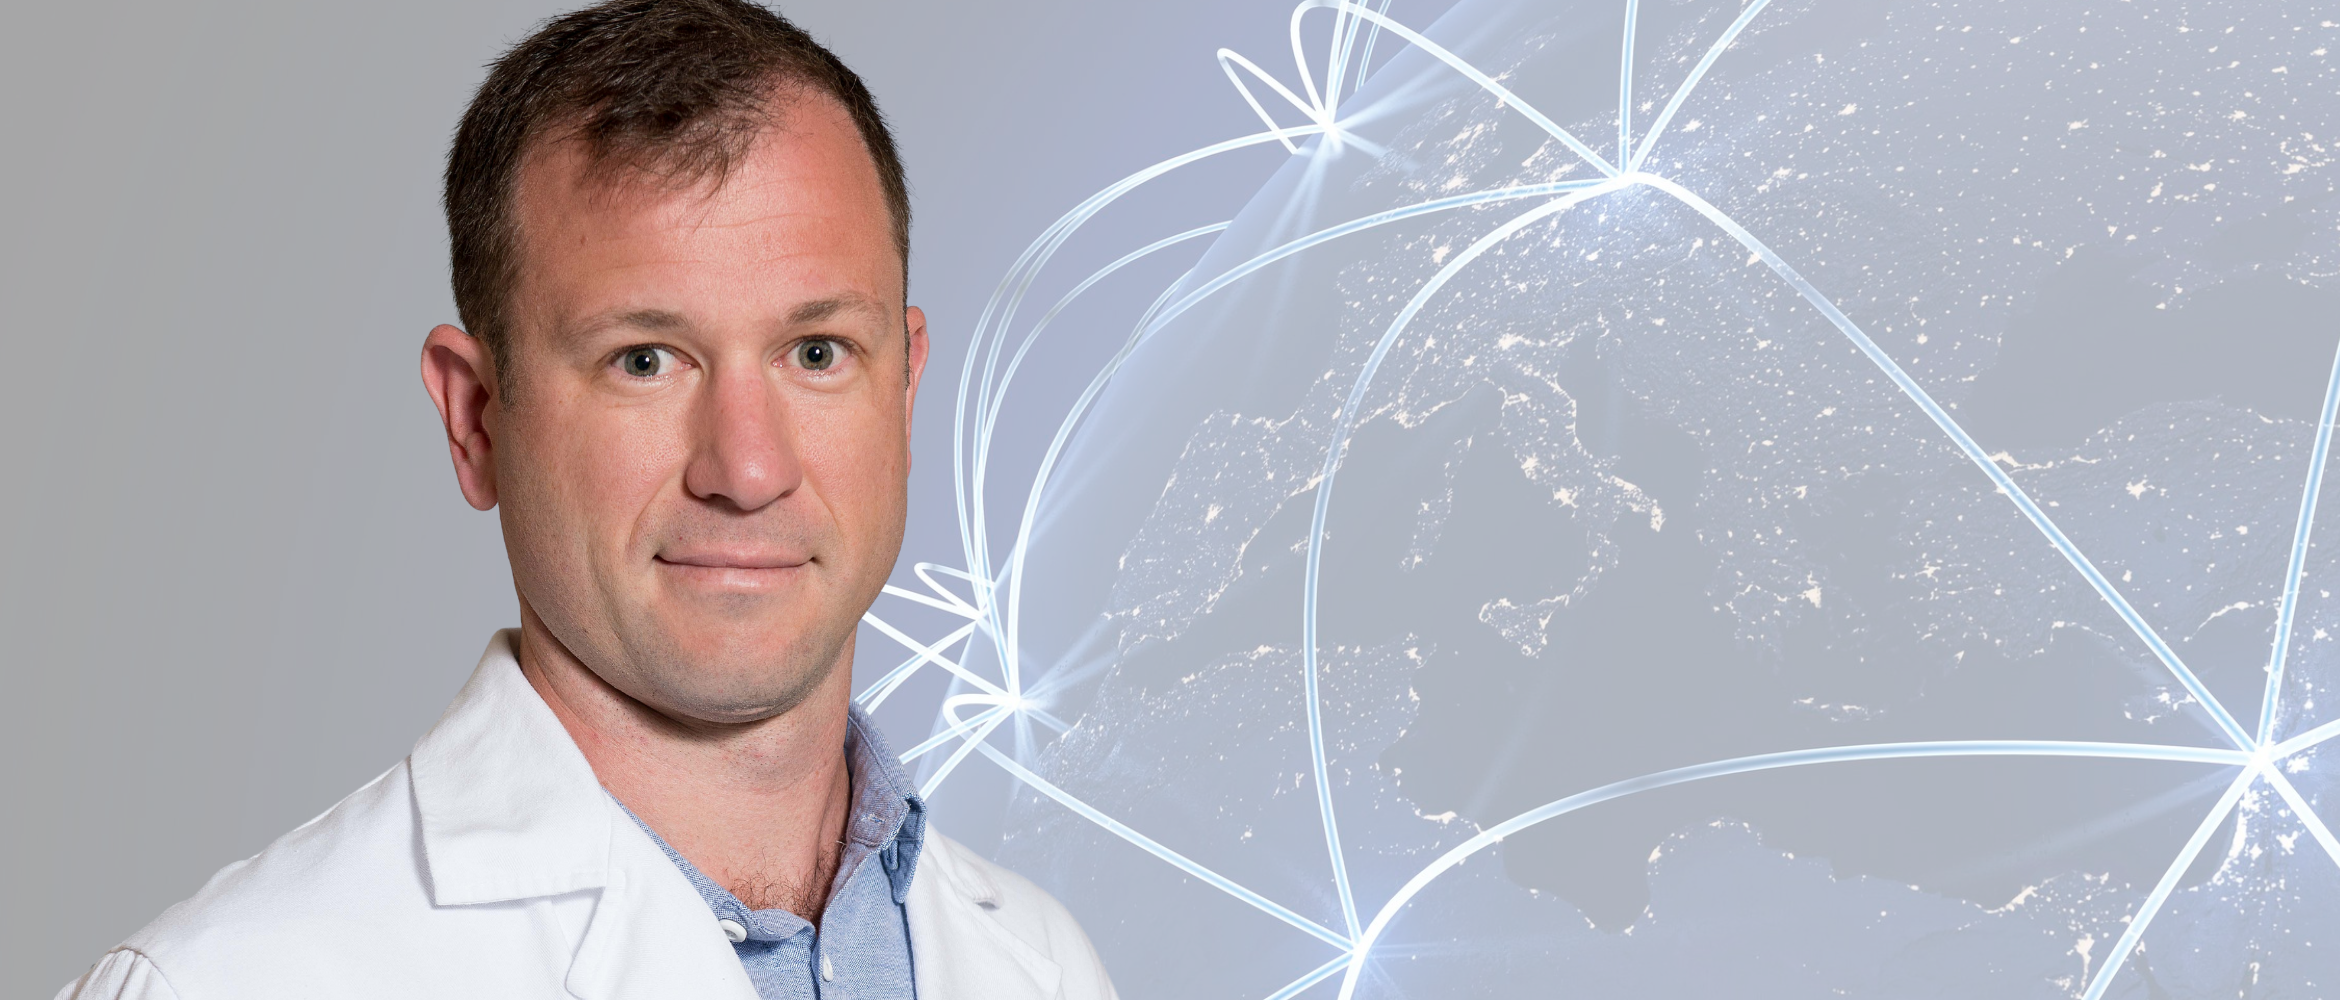 UBC Orthopaedics Welcomes Dr. Jeff Potter as Director of Global Orthopaedics